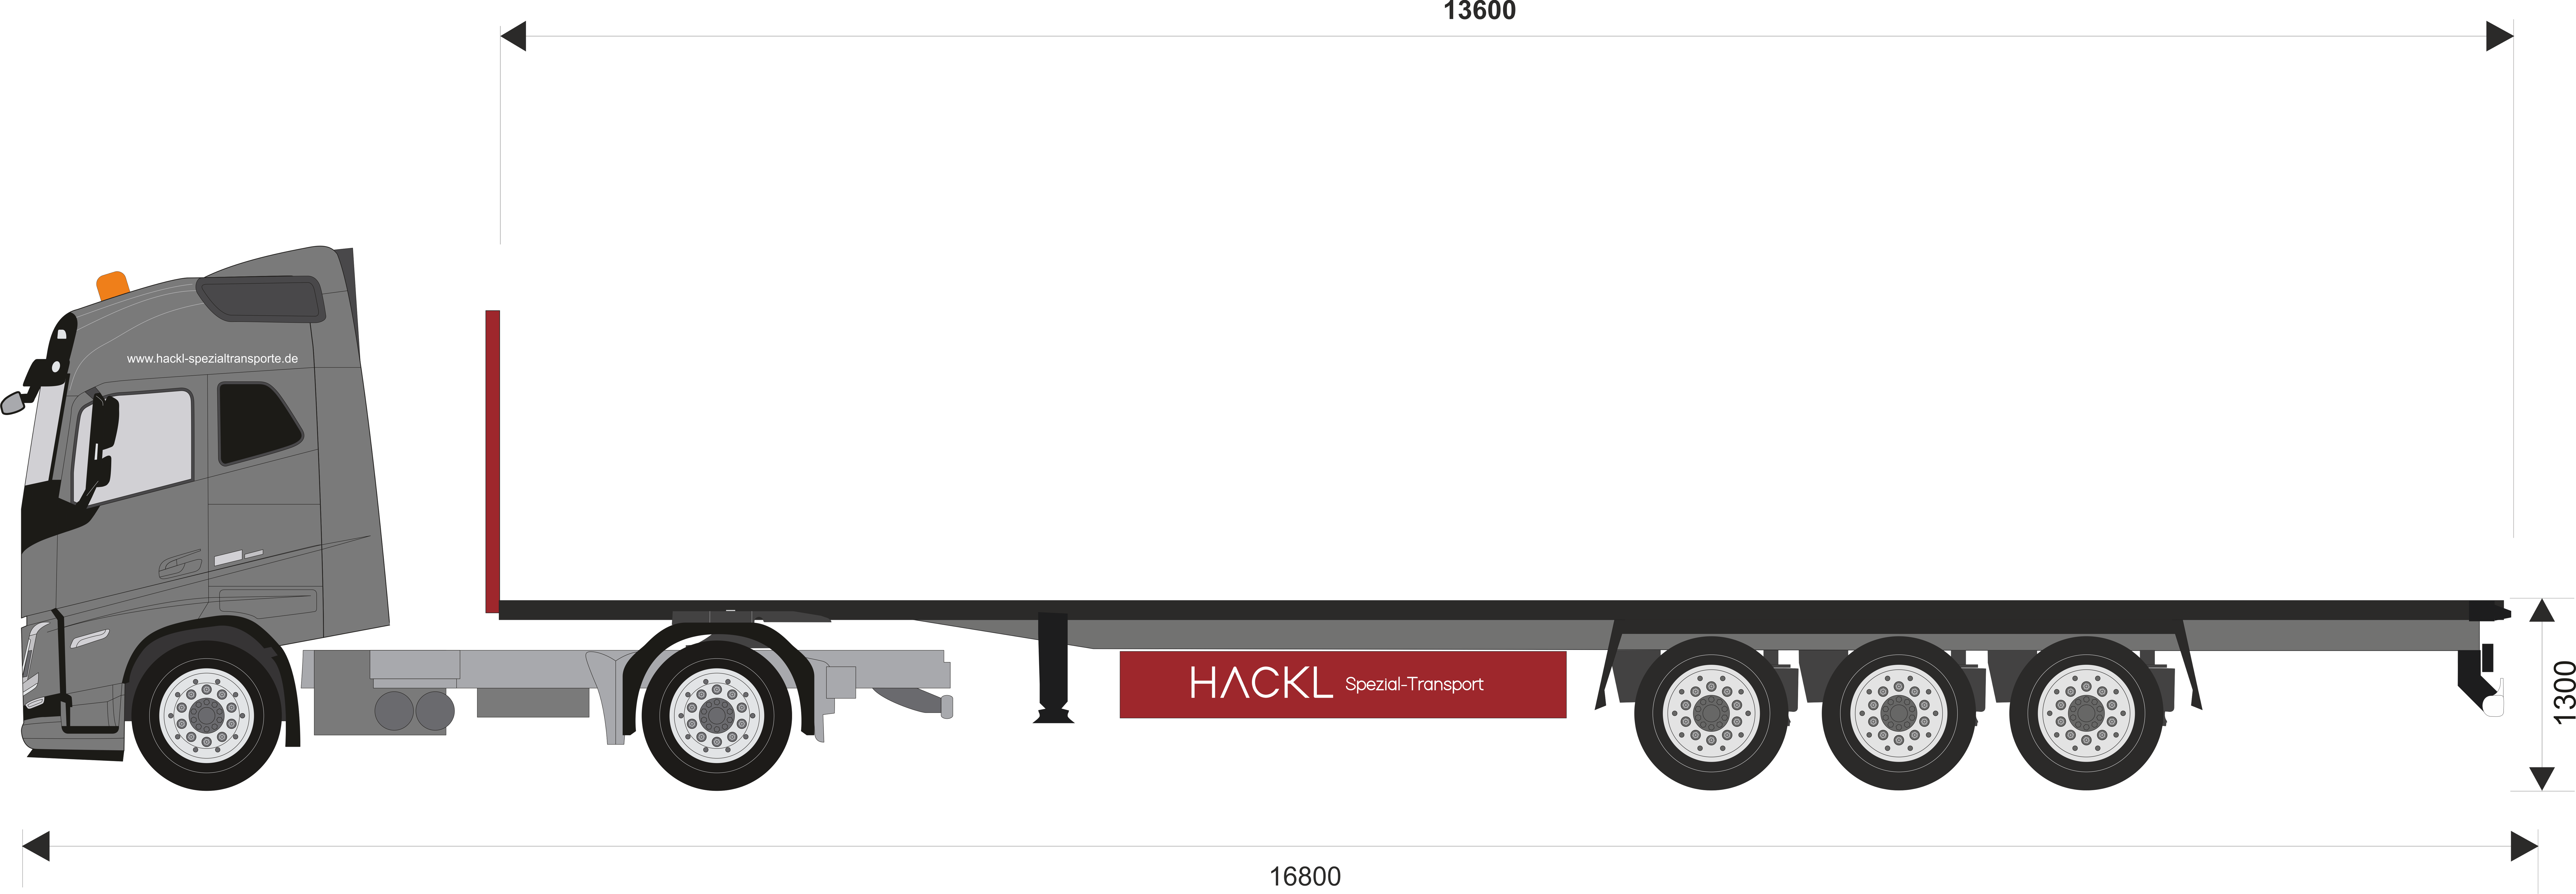 Hackl-Spezialtransporte400